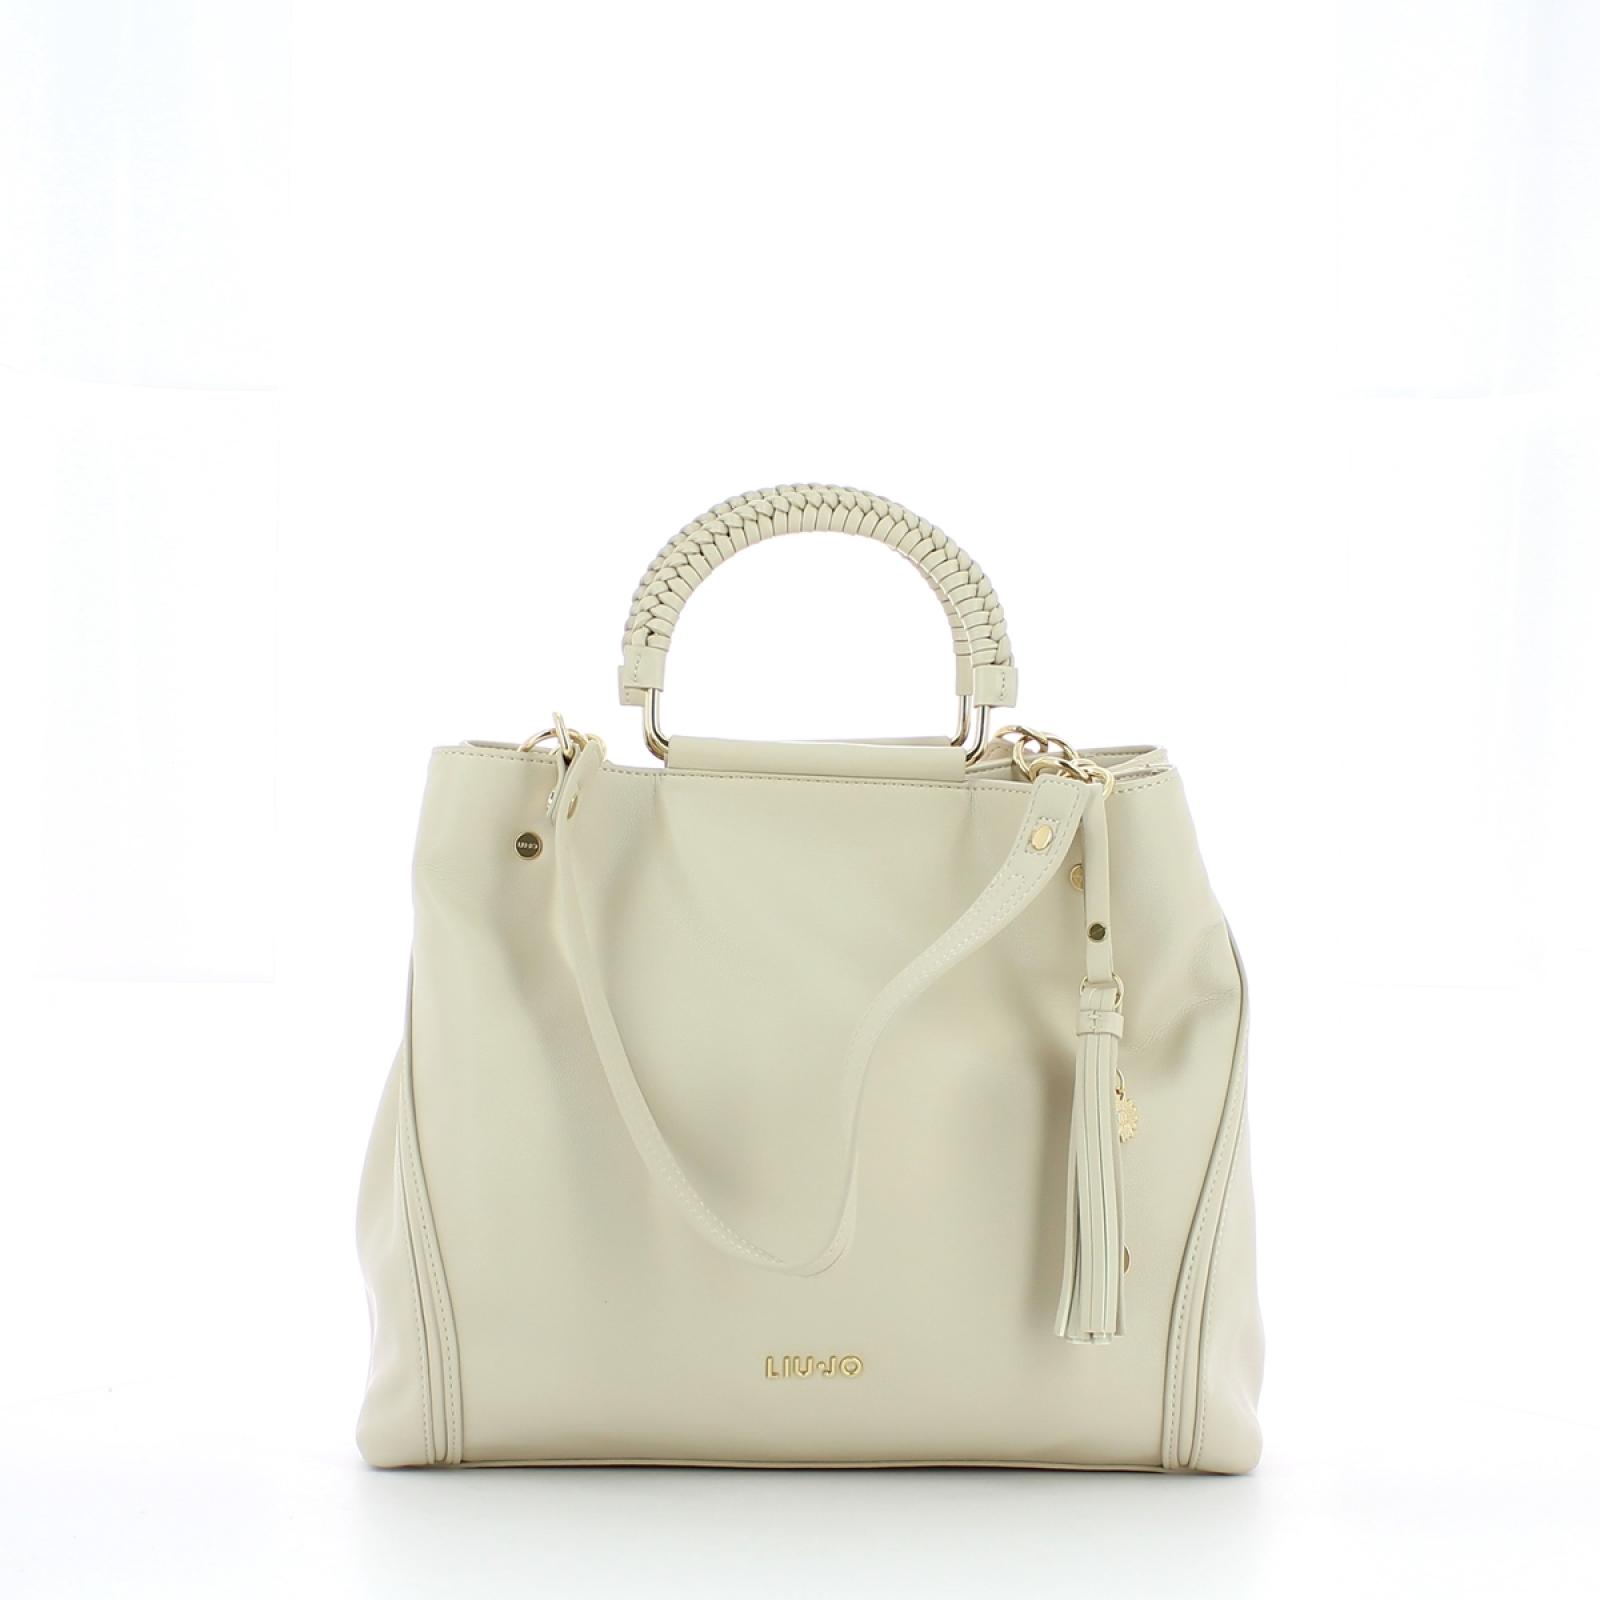 Liu Jo Shopping Bag doppio manico - 1